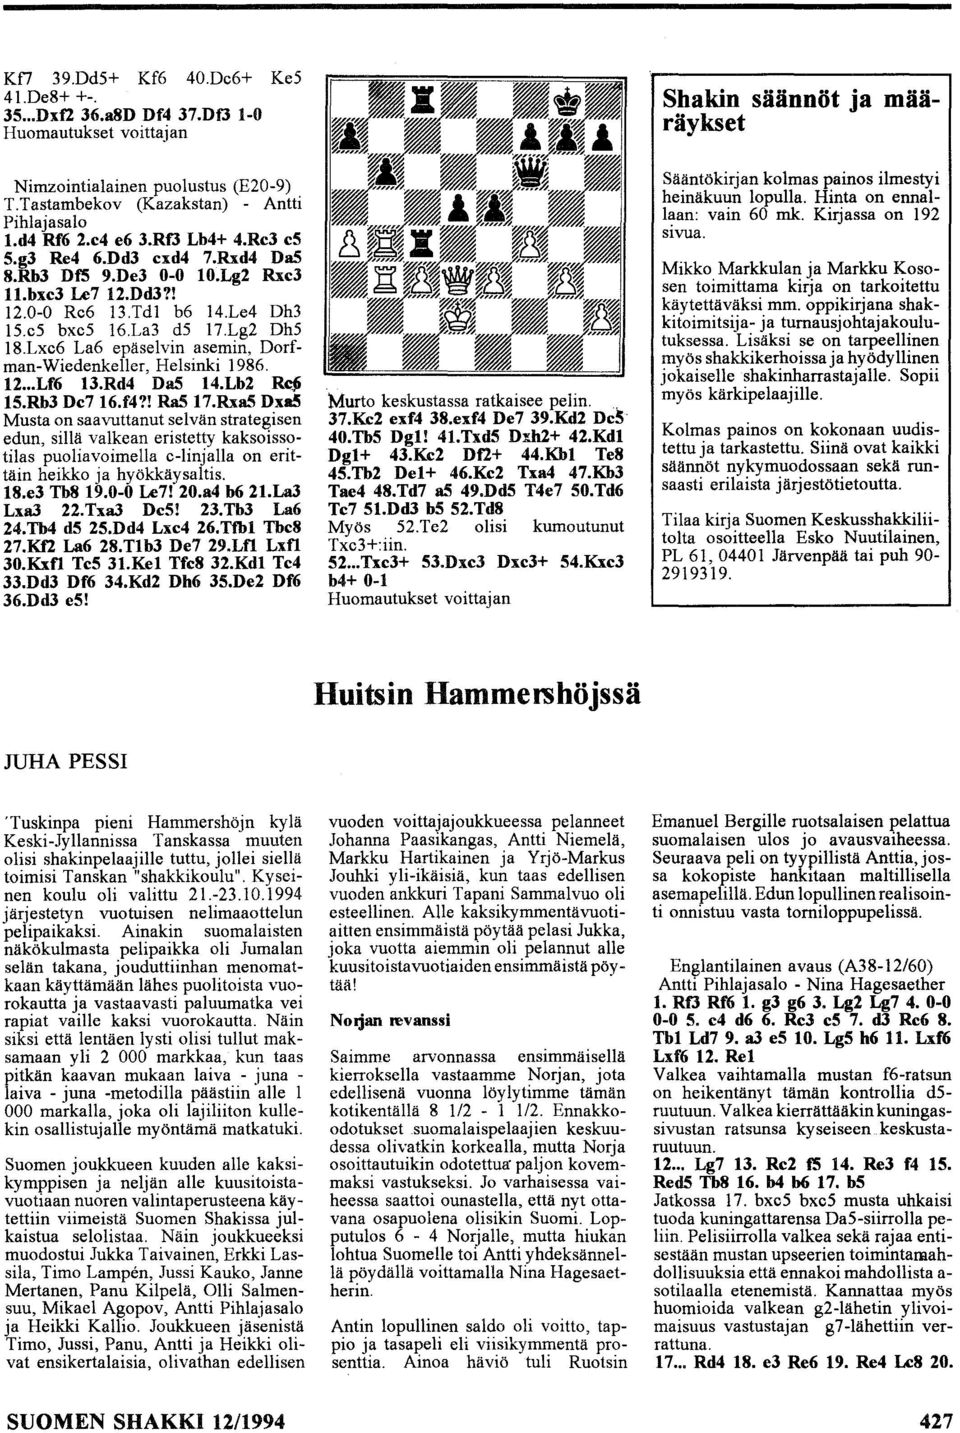 Lxc6 La6 epäselvin asemin, Dorfman-Wiedenkeller, Helsinki 1986. 12... Lf6 13.Rd4 DaS 14.Lb2 Rc1i 15.Rb3 De716.f4?! Ra5 17.